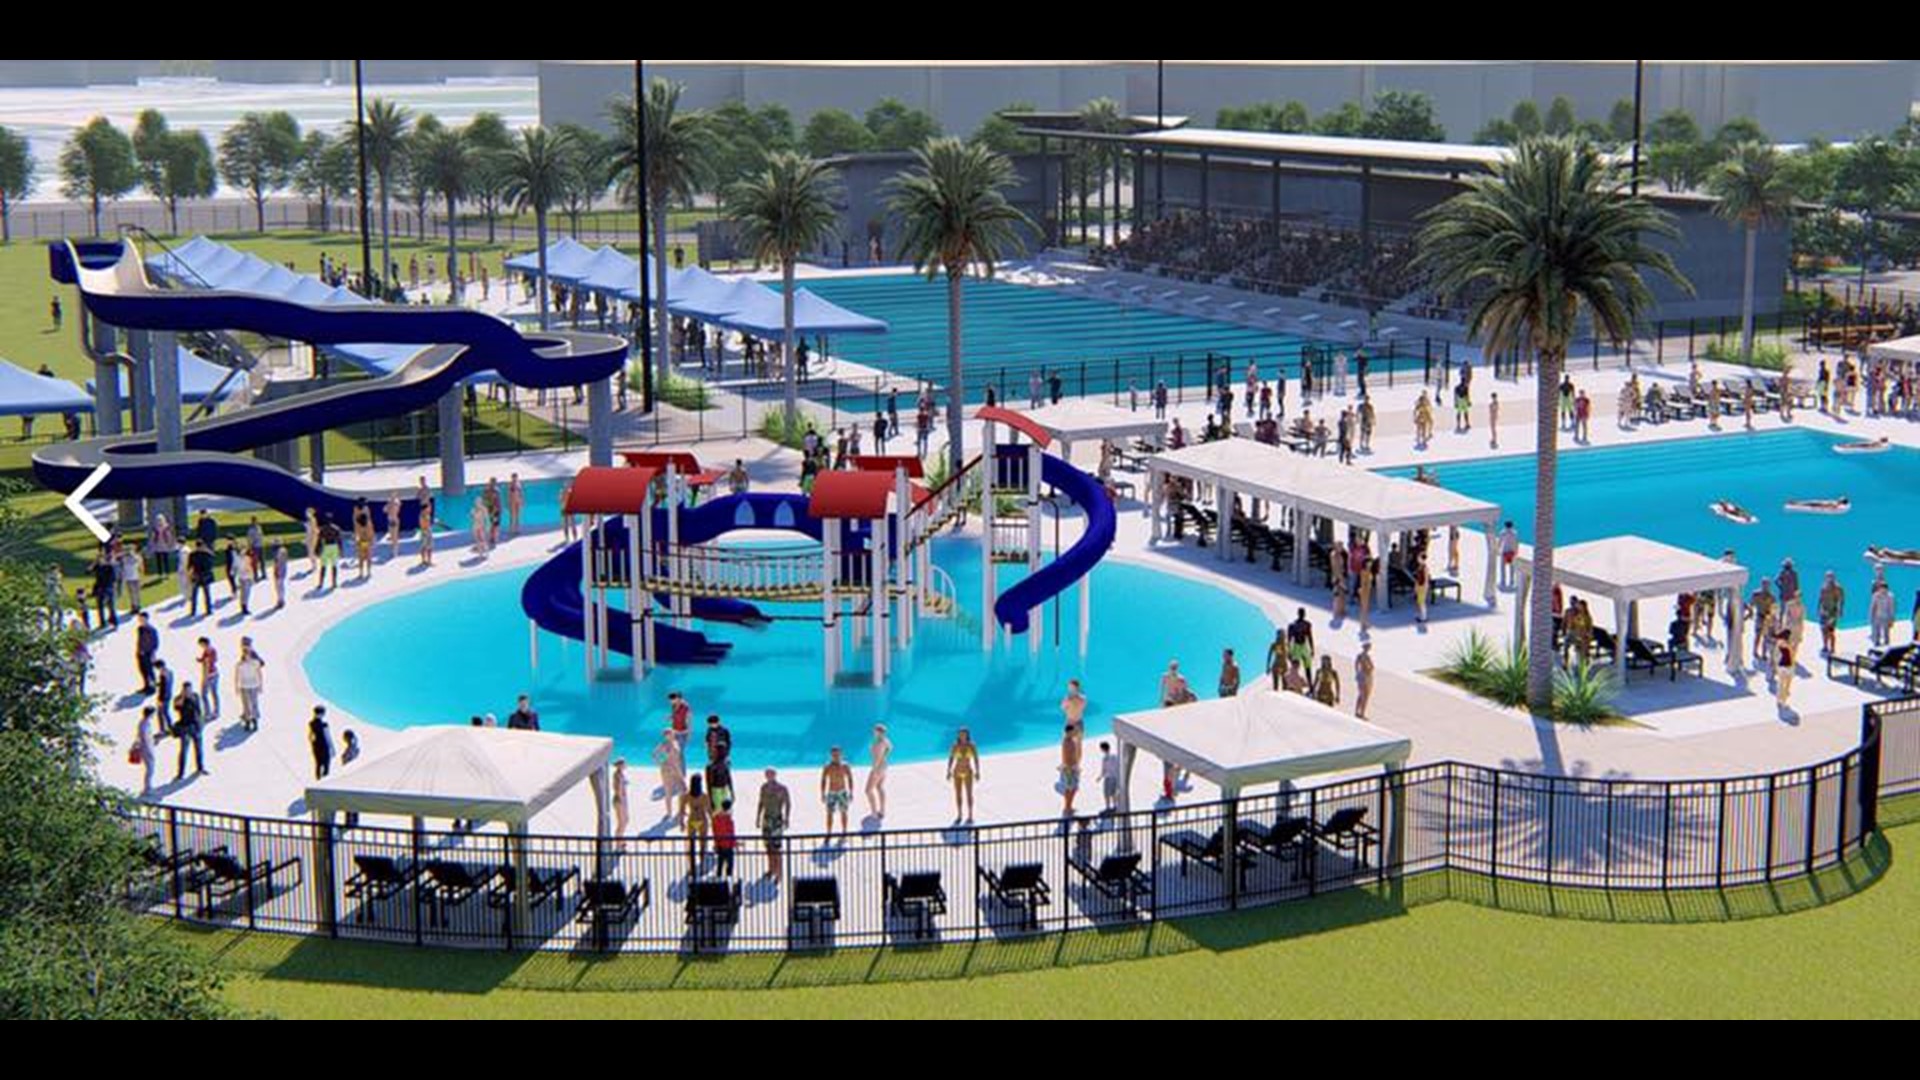 Brand New Aquatic Center In Natomas To Break Ground Soon City